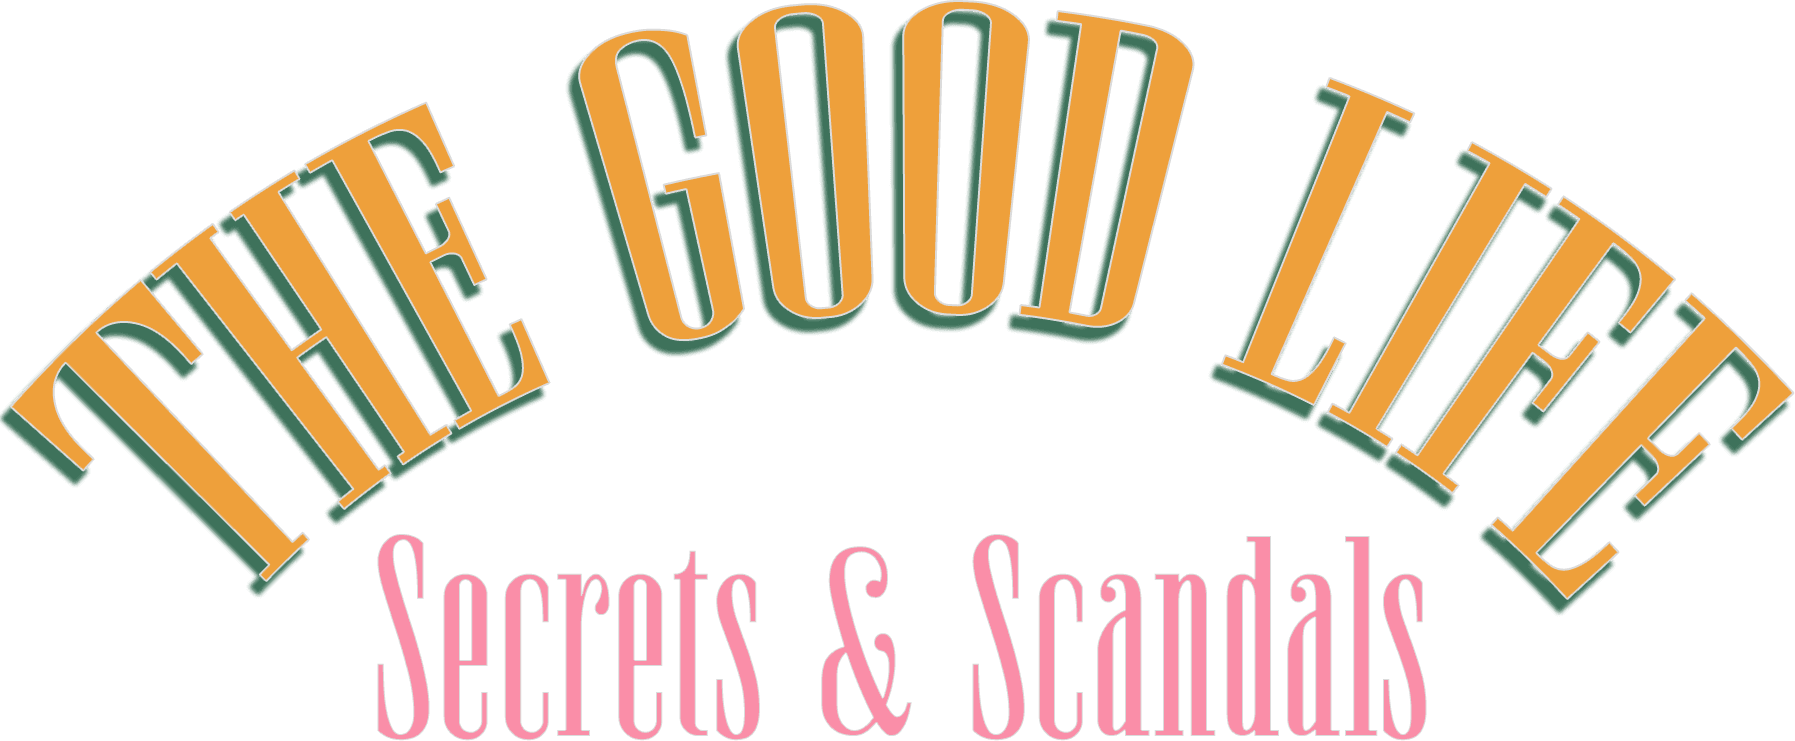 The Good Life: Secret & Scandals logo